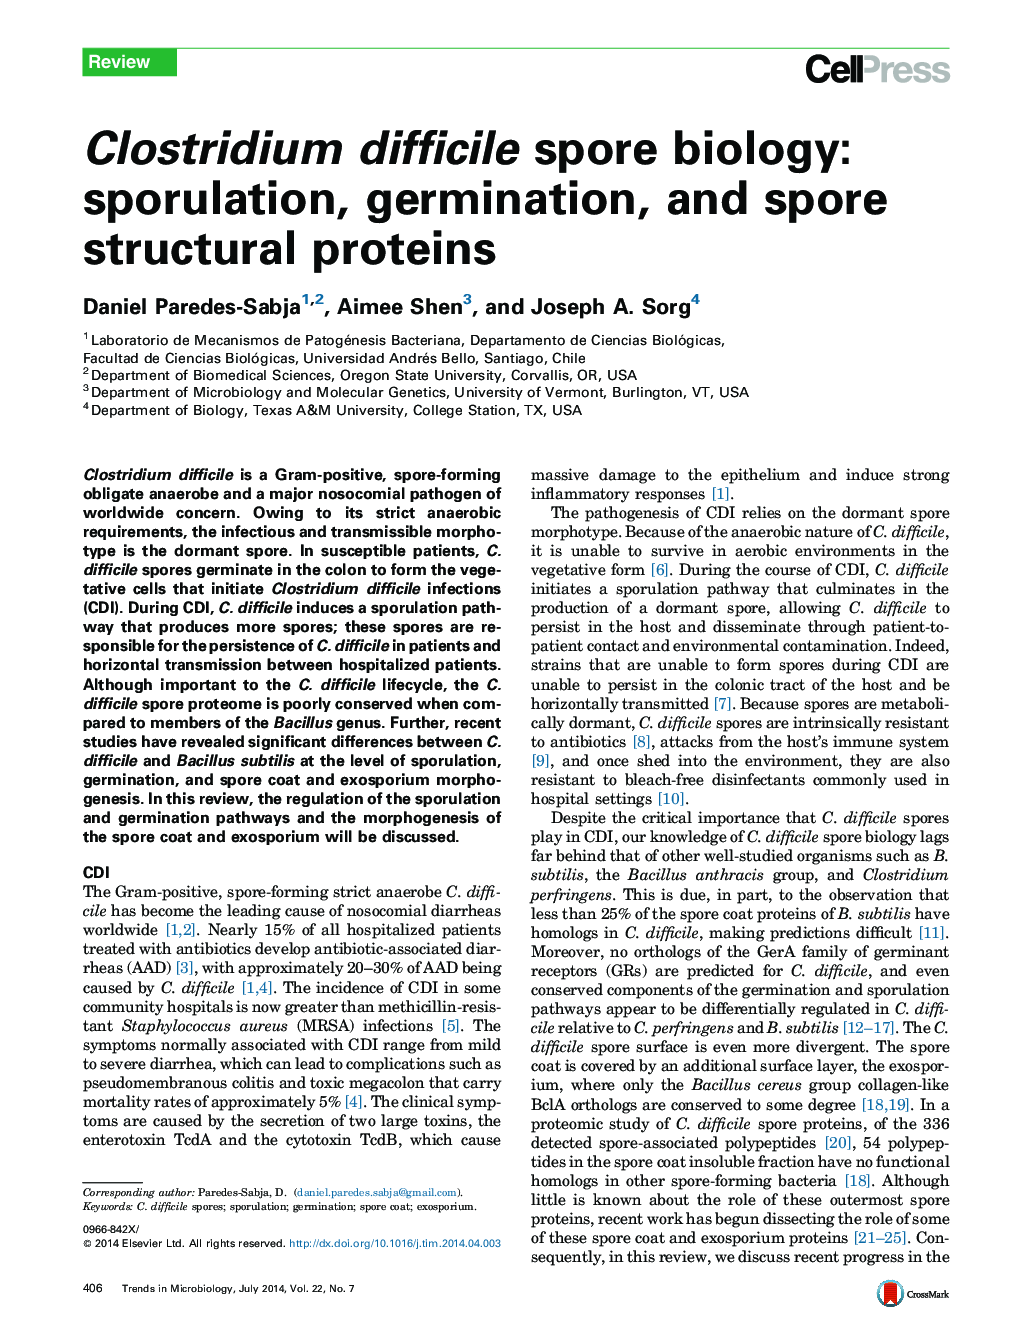 Clostridium difficile spore biology: sporulation, germination, and spore structural proteins